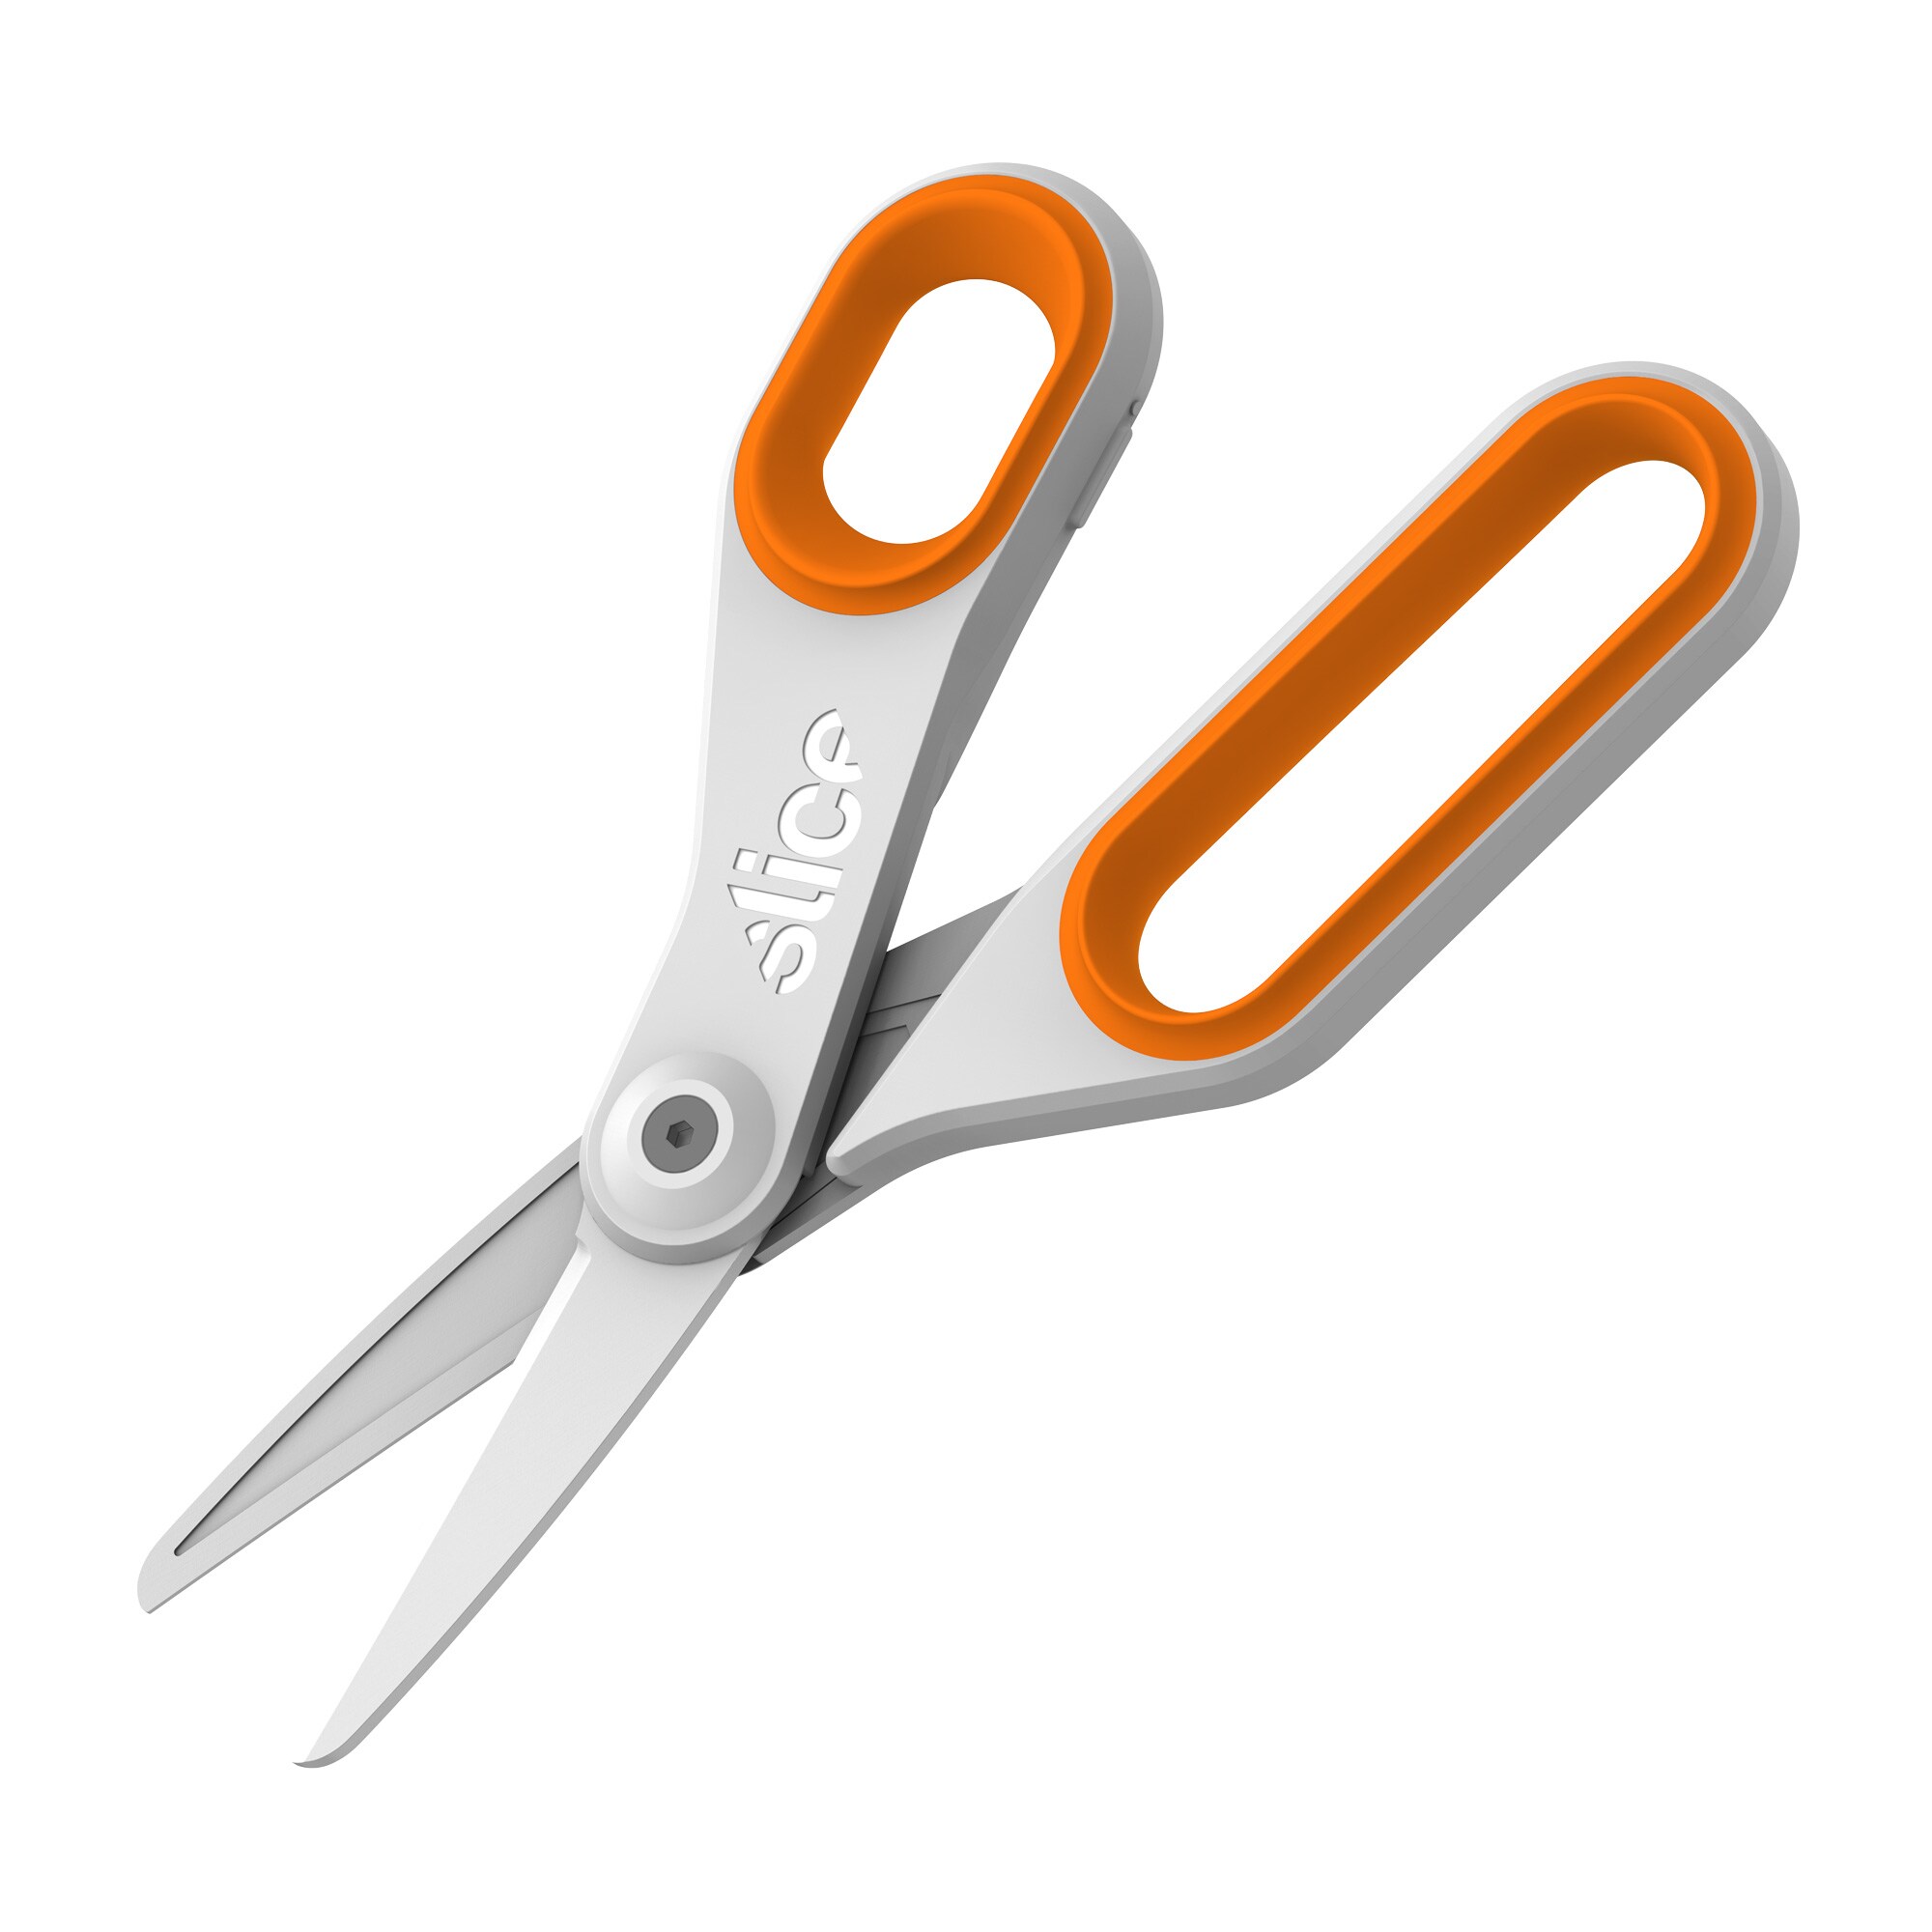 WORX 1.5-in Stainless Steel Shaft Scissors in the Scissors